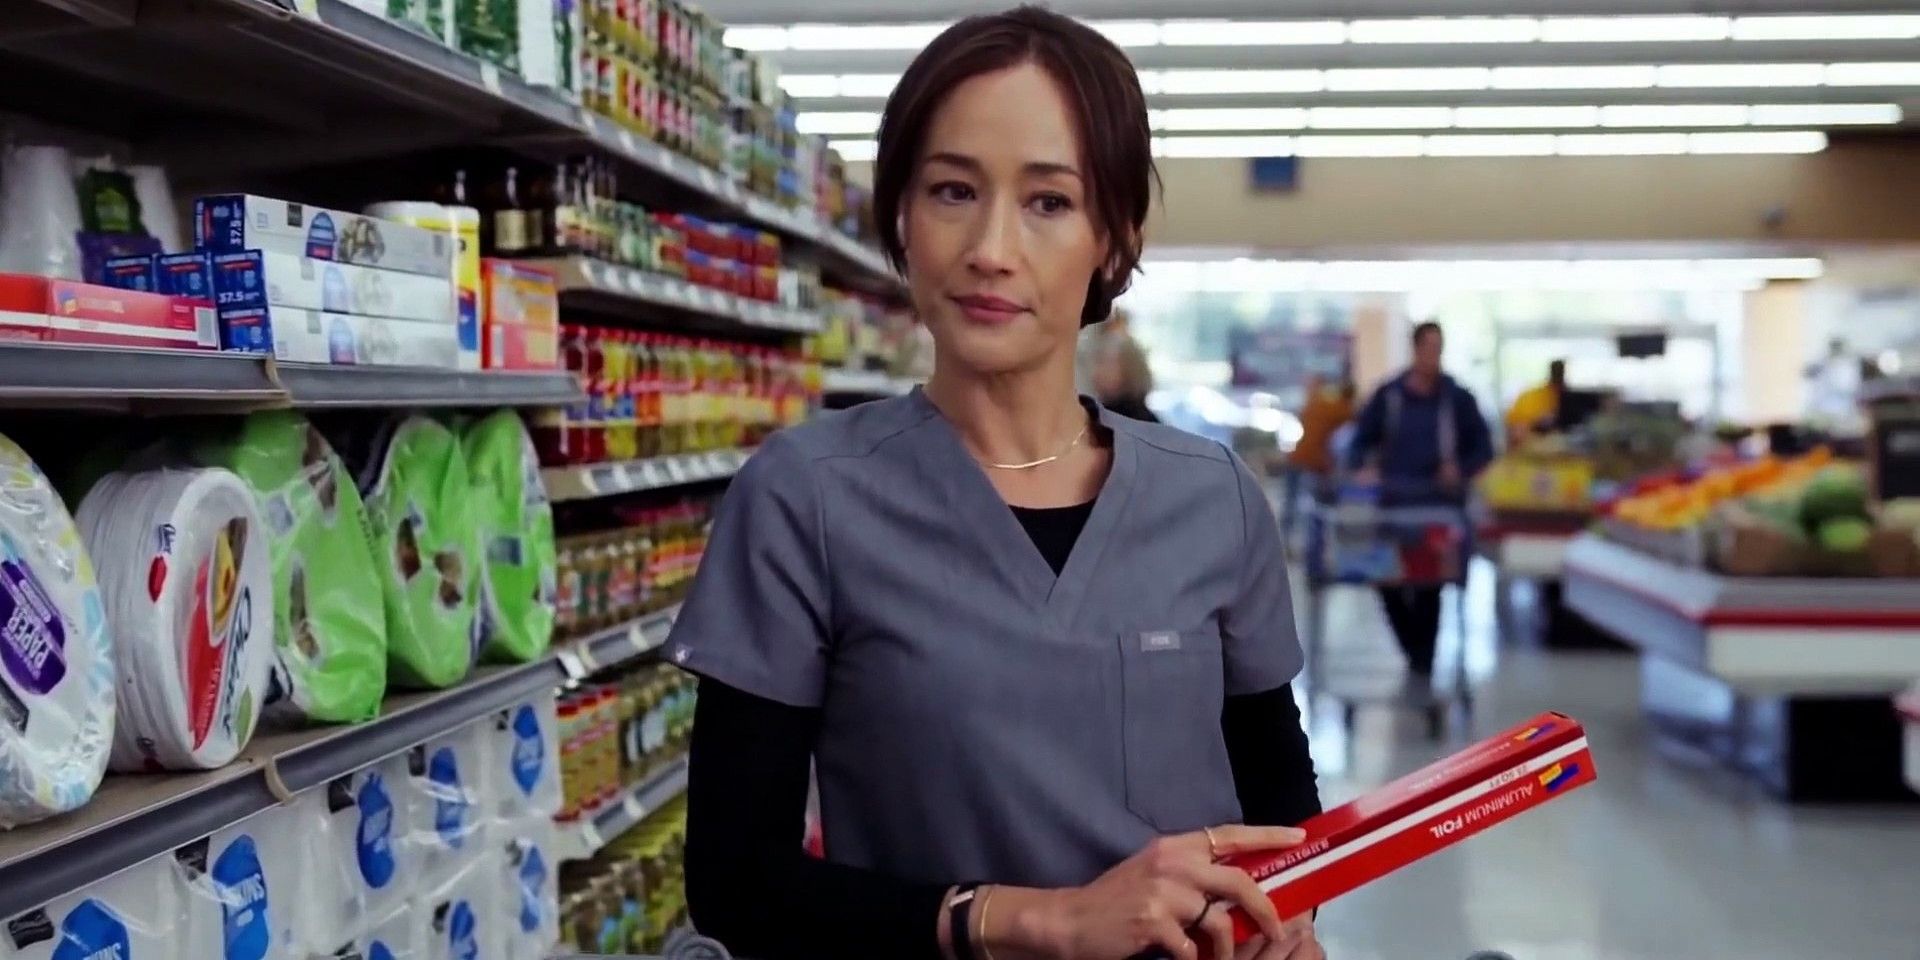 Sarah standing in supermarket in Pivoting.